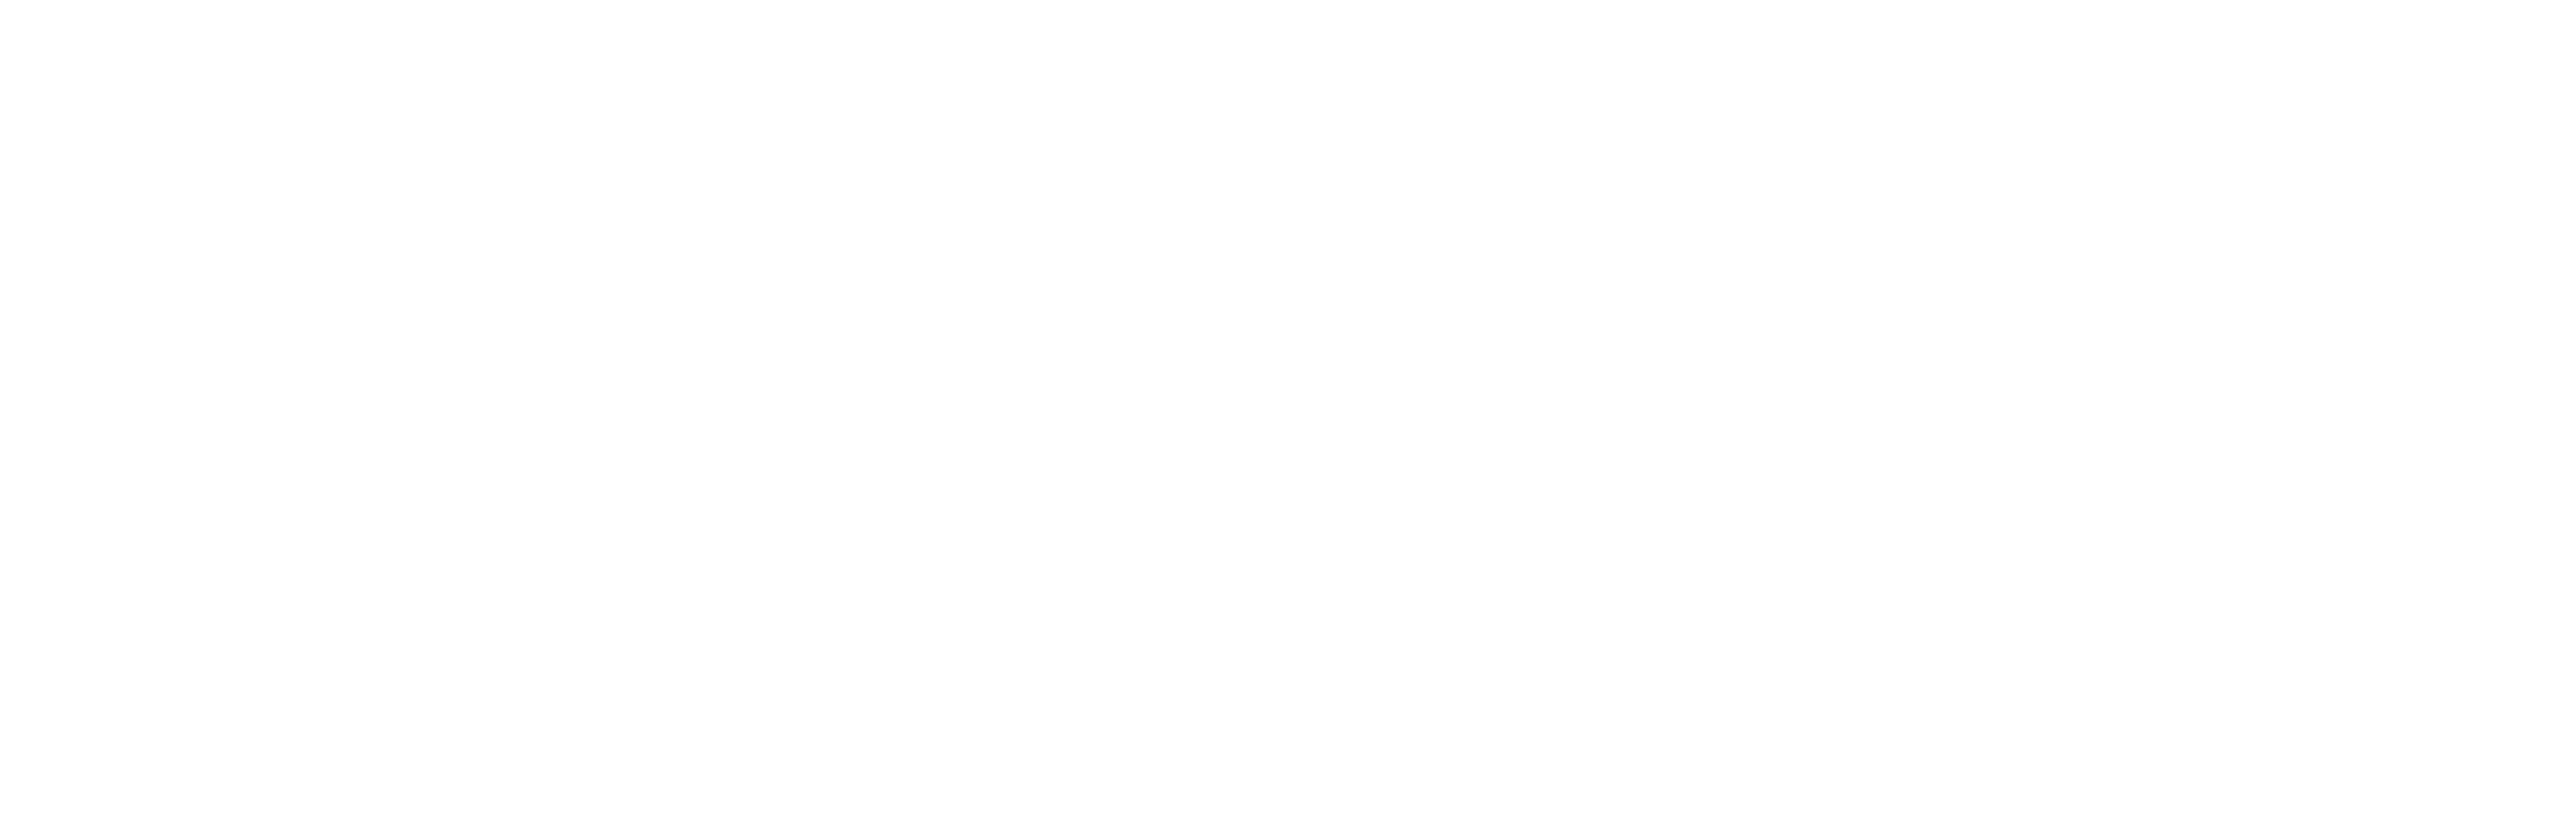 AniCura Aitana Hospital Veterinario logo